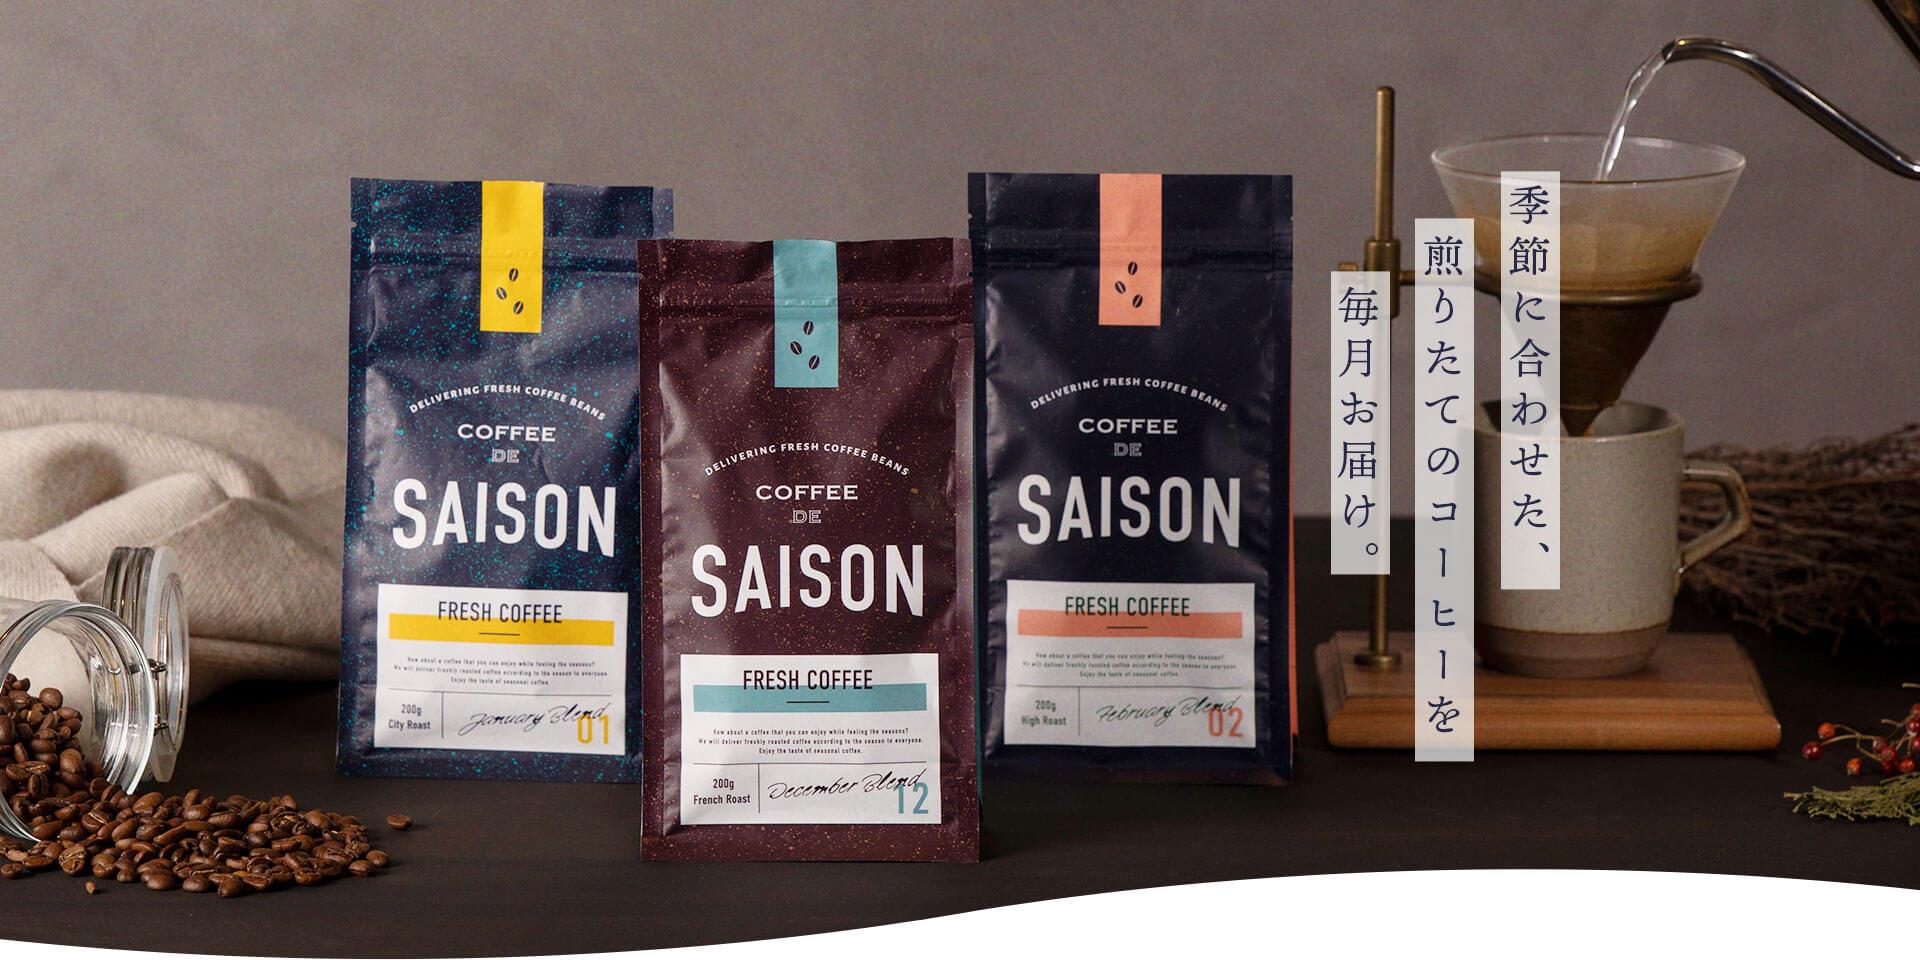 COFFEE DE SAISON(コーヒーデセゾン)